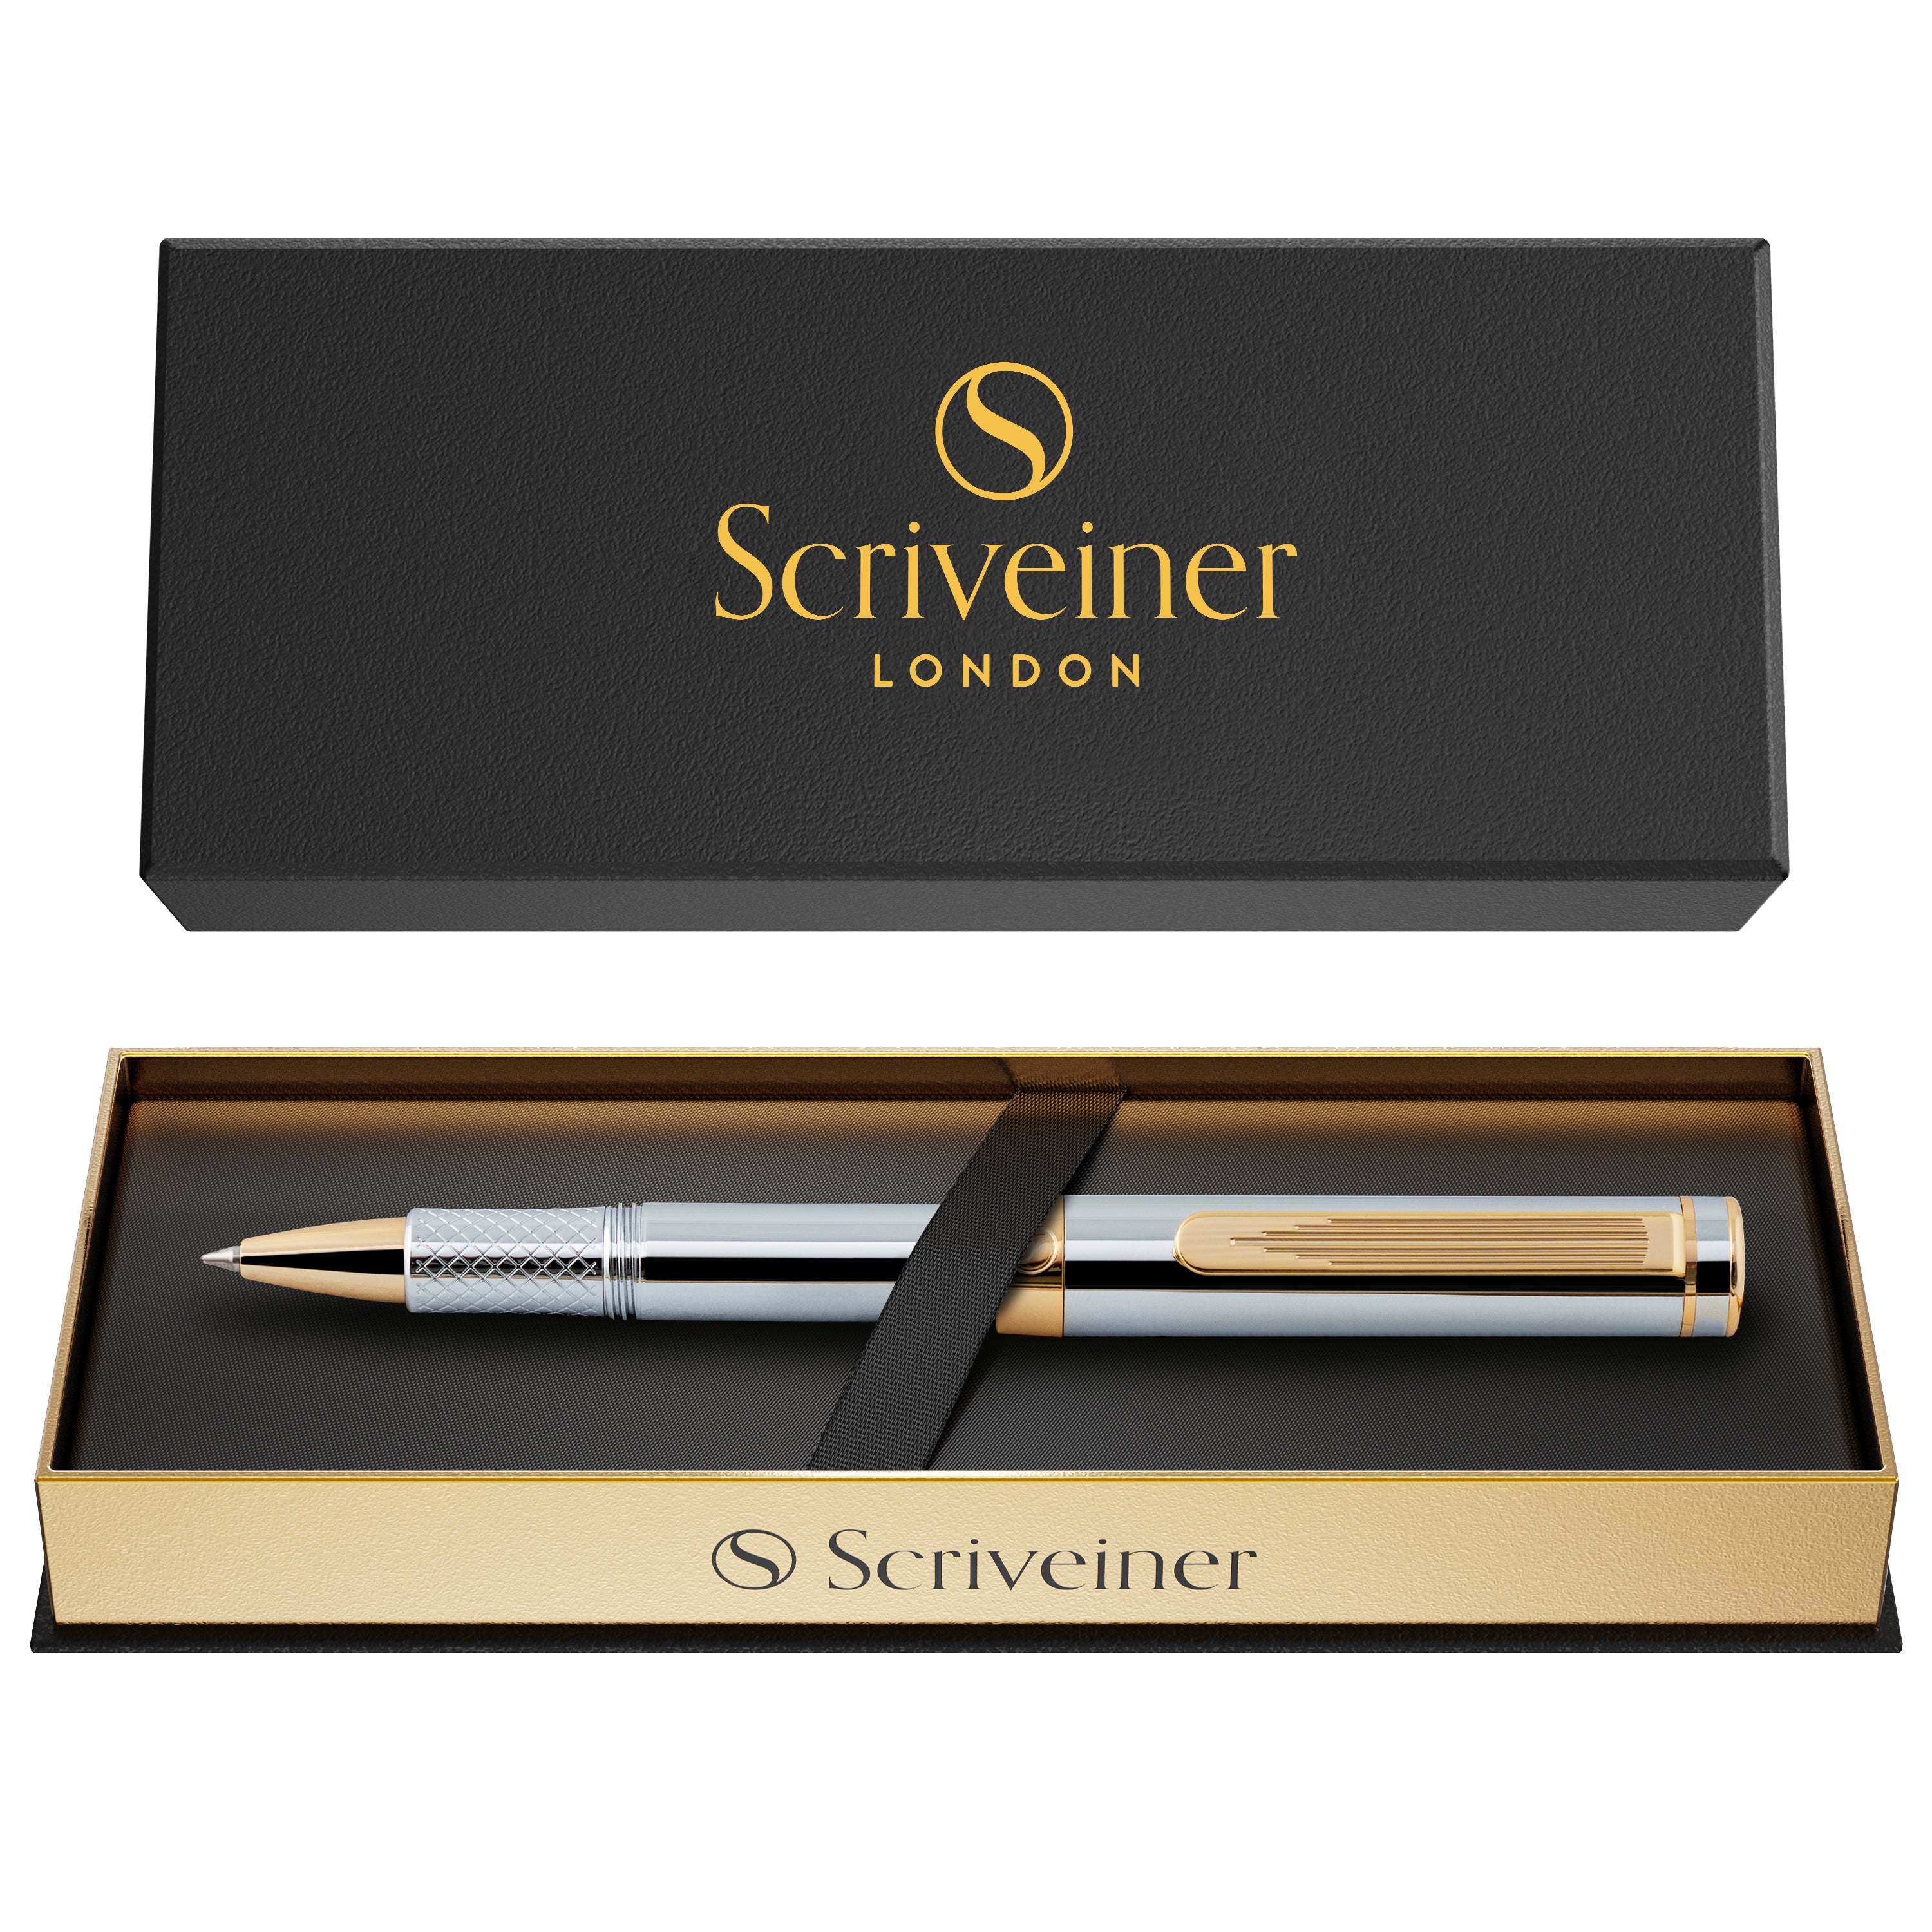 Scriveiner EDC Silver Chrome Rollerball, Award Winning Luxury Pen, Heavy Pocket Pen, 24K Gold Finish